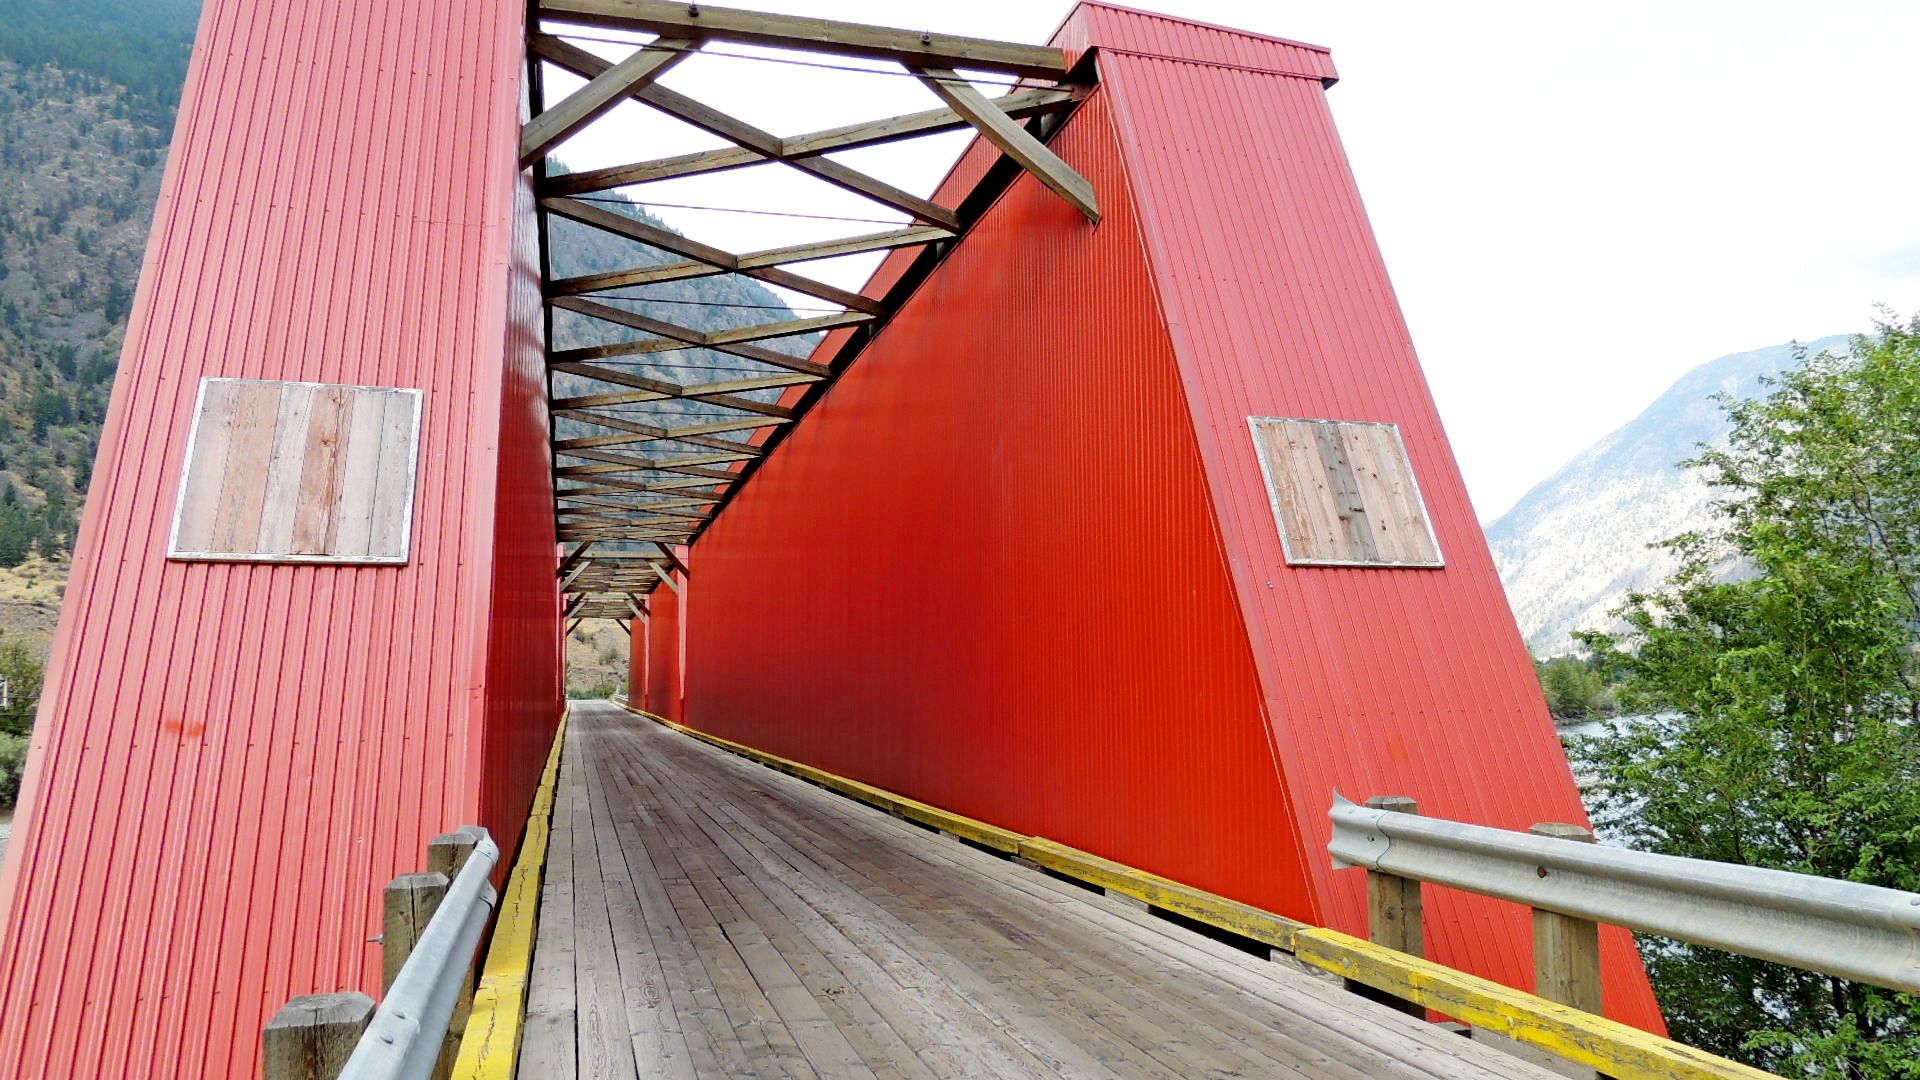 The Red Bridge - Keremeos, BC - Covered Bridges on Waymarking.com